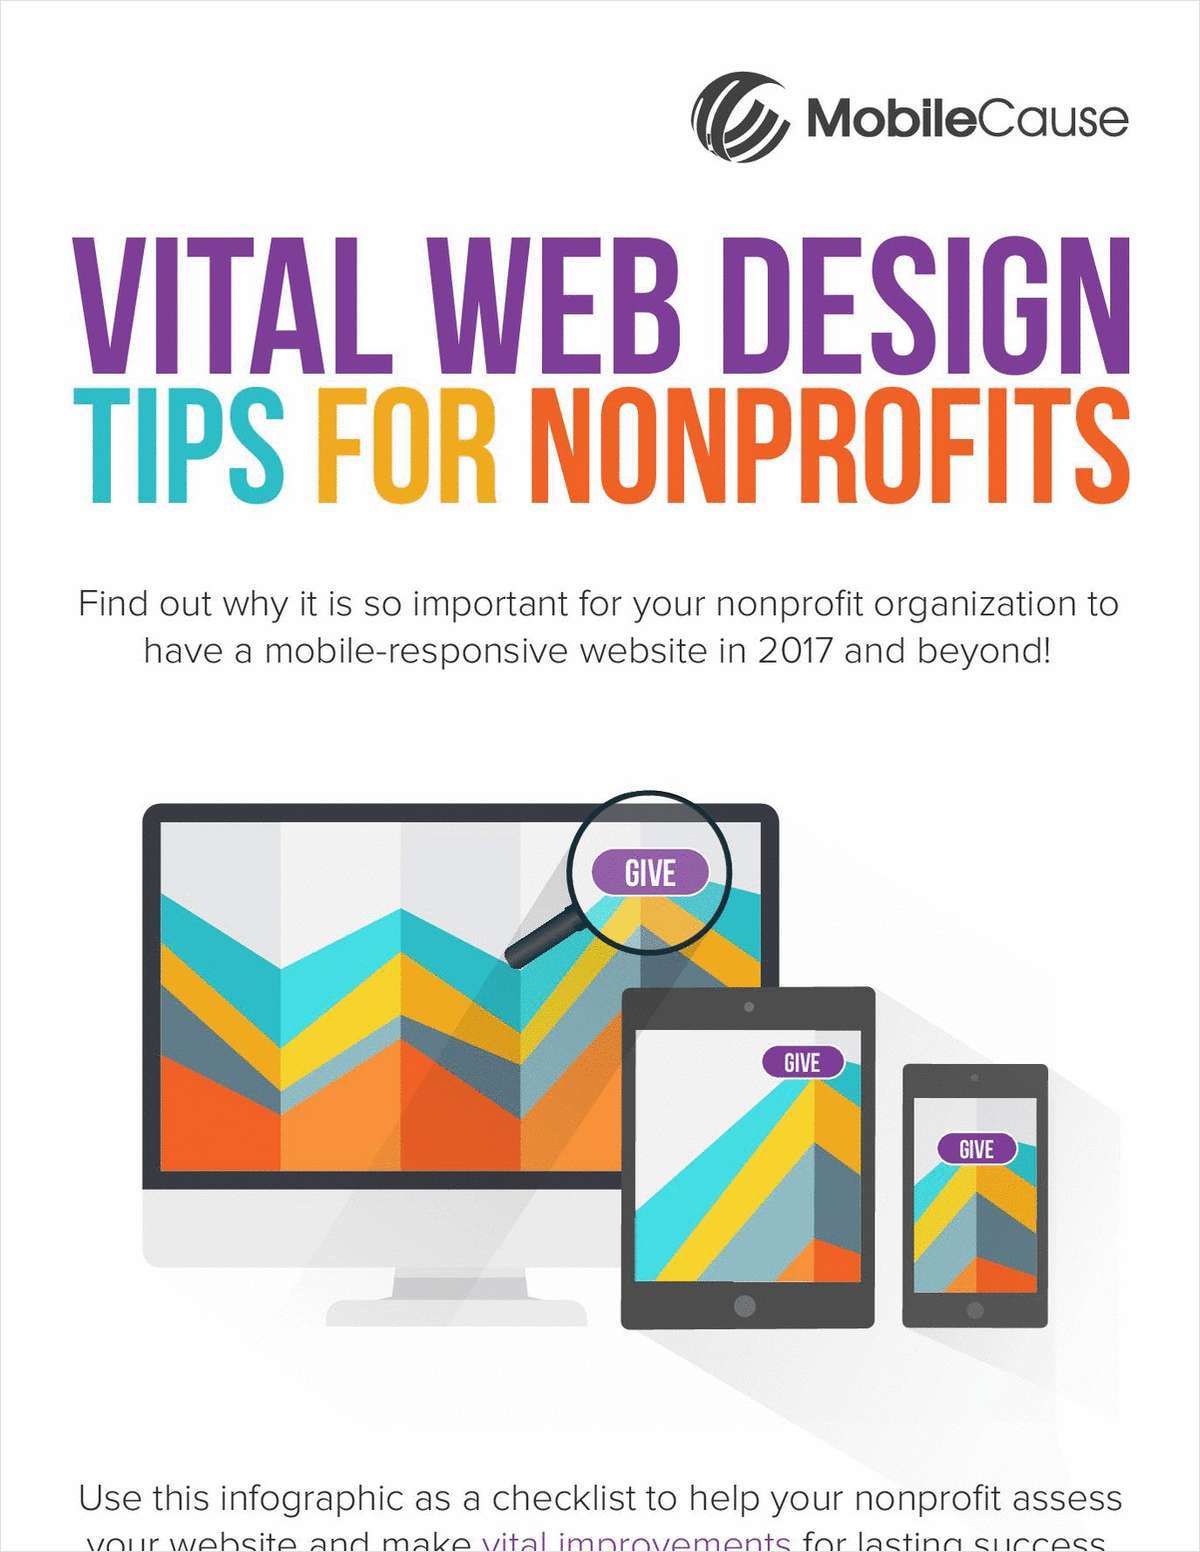 Vital Web Design Tips for Nonprofits Infographic